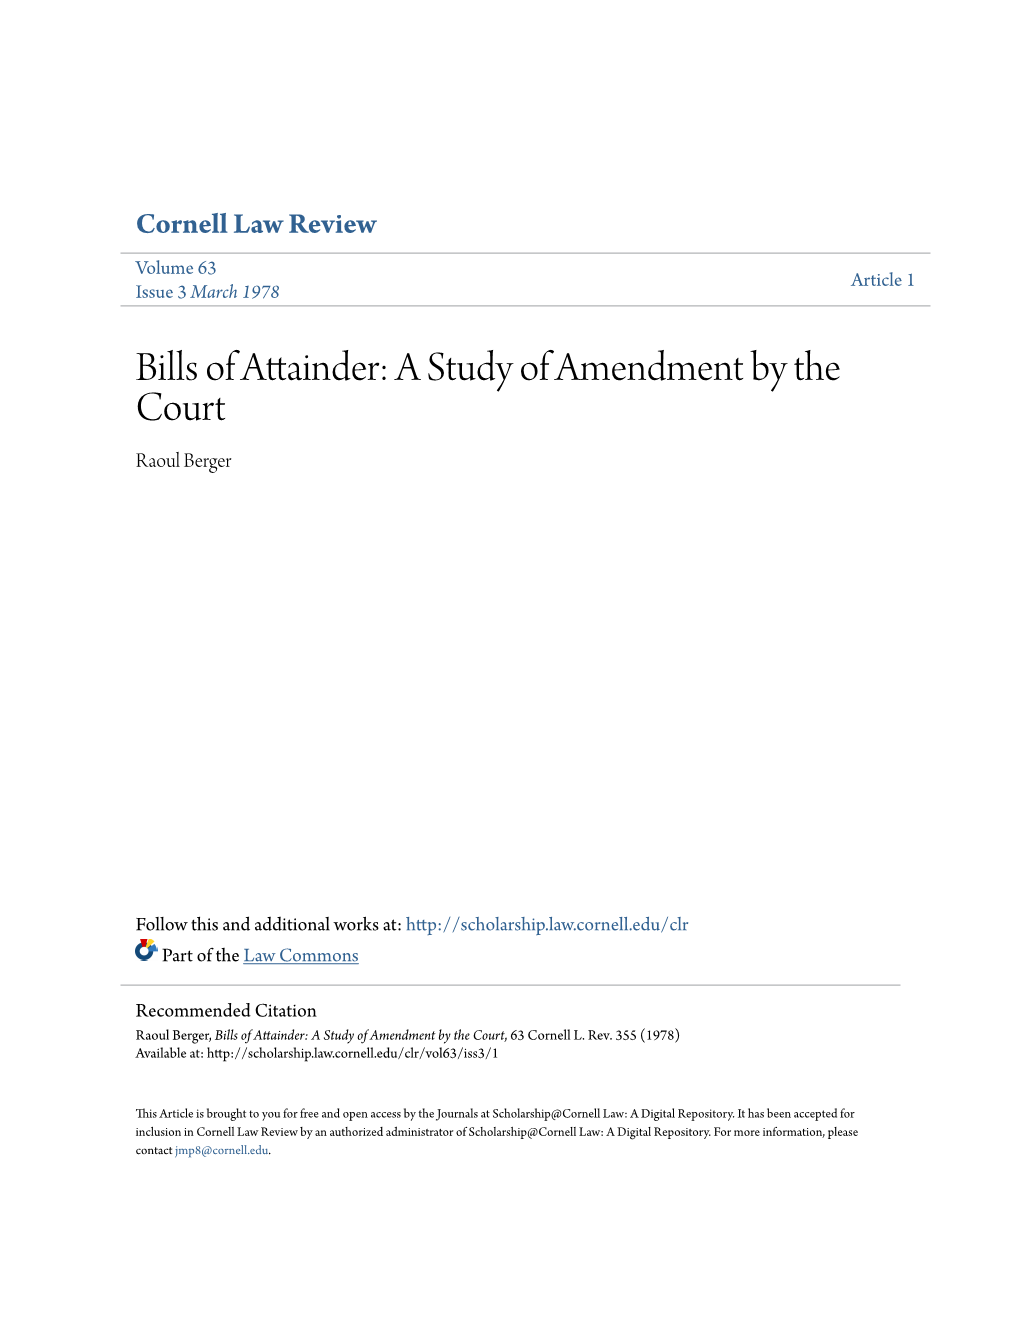 Bills of Attainder: a Study of Amendment by the Court Raoul Berger